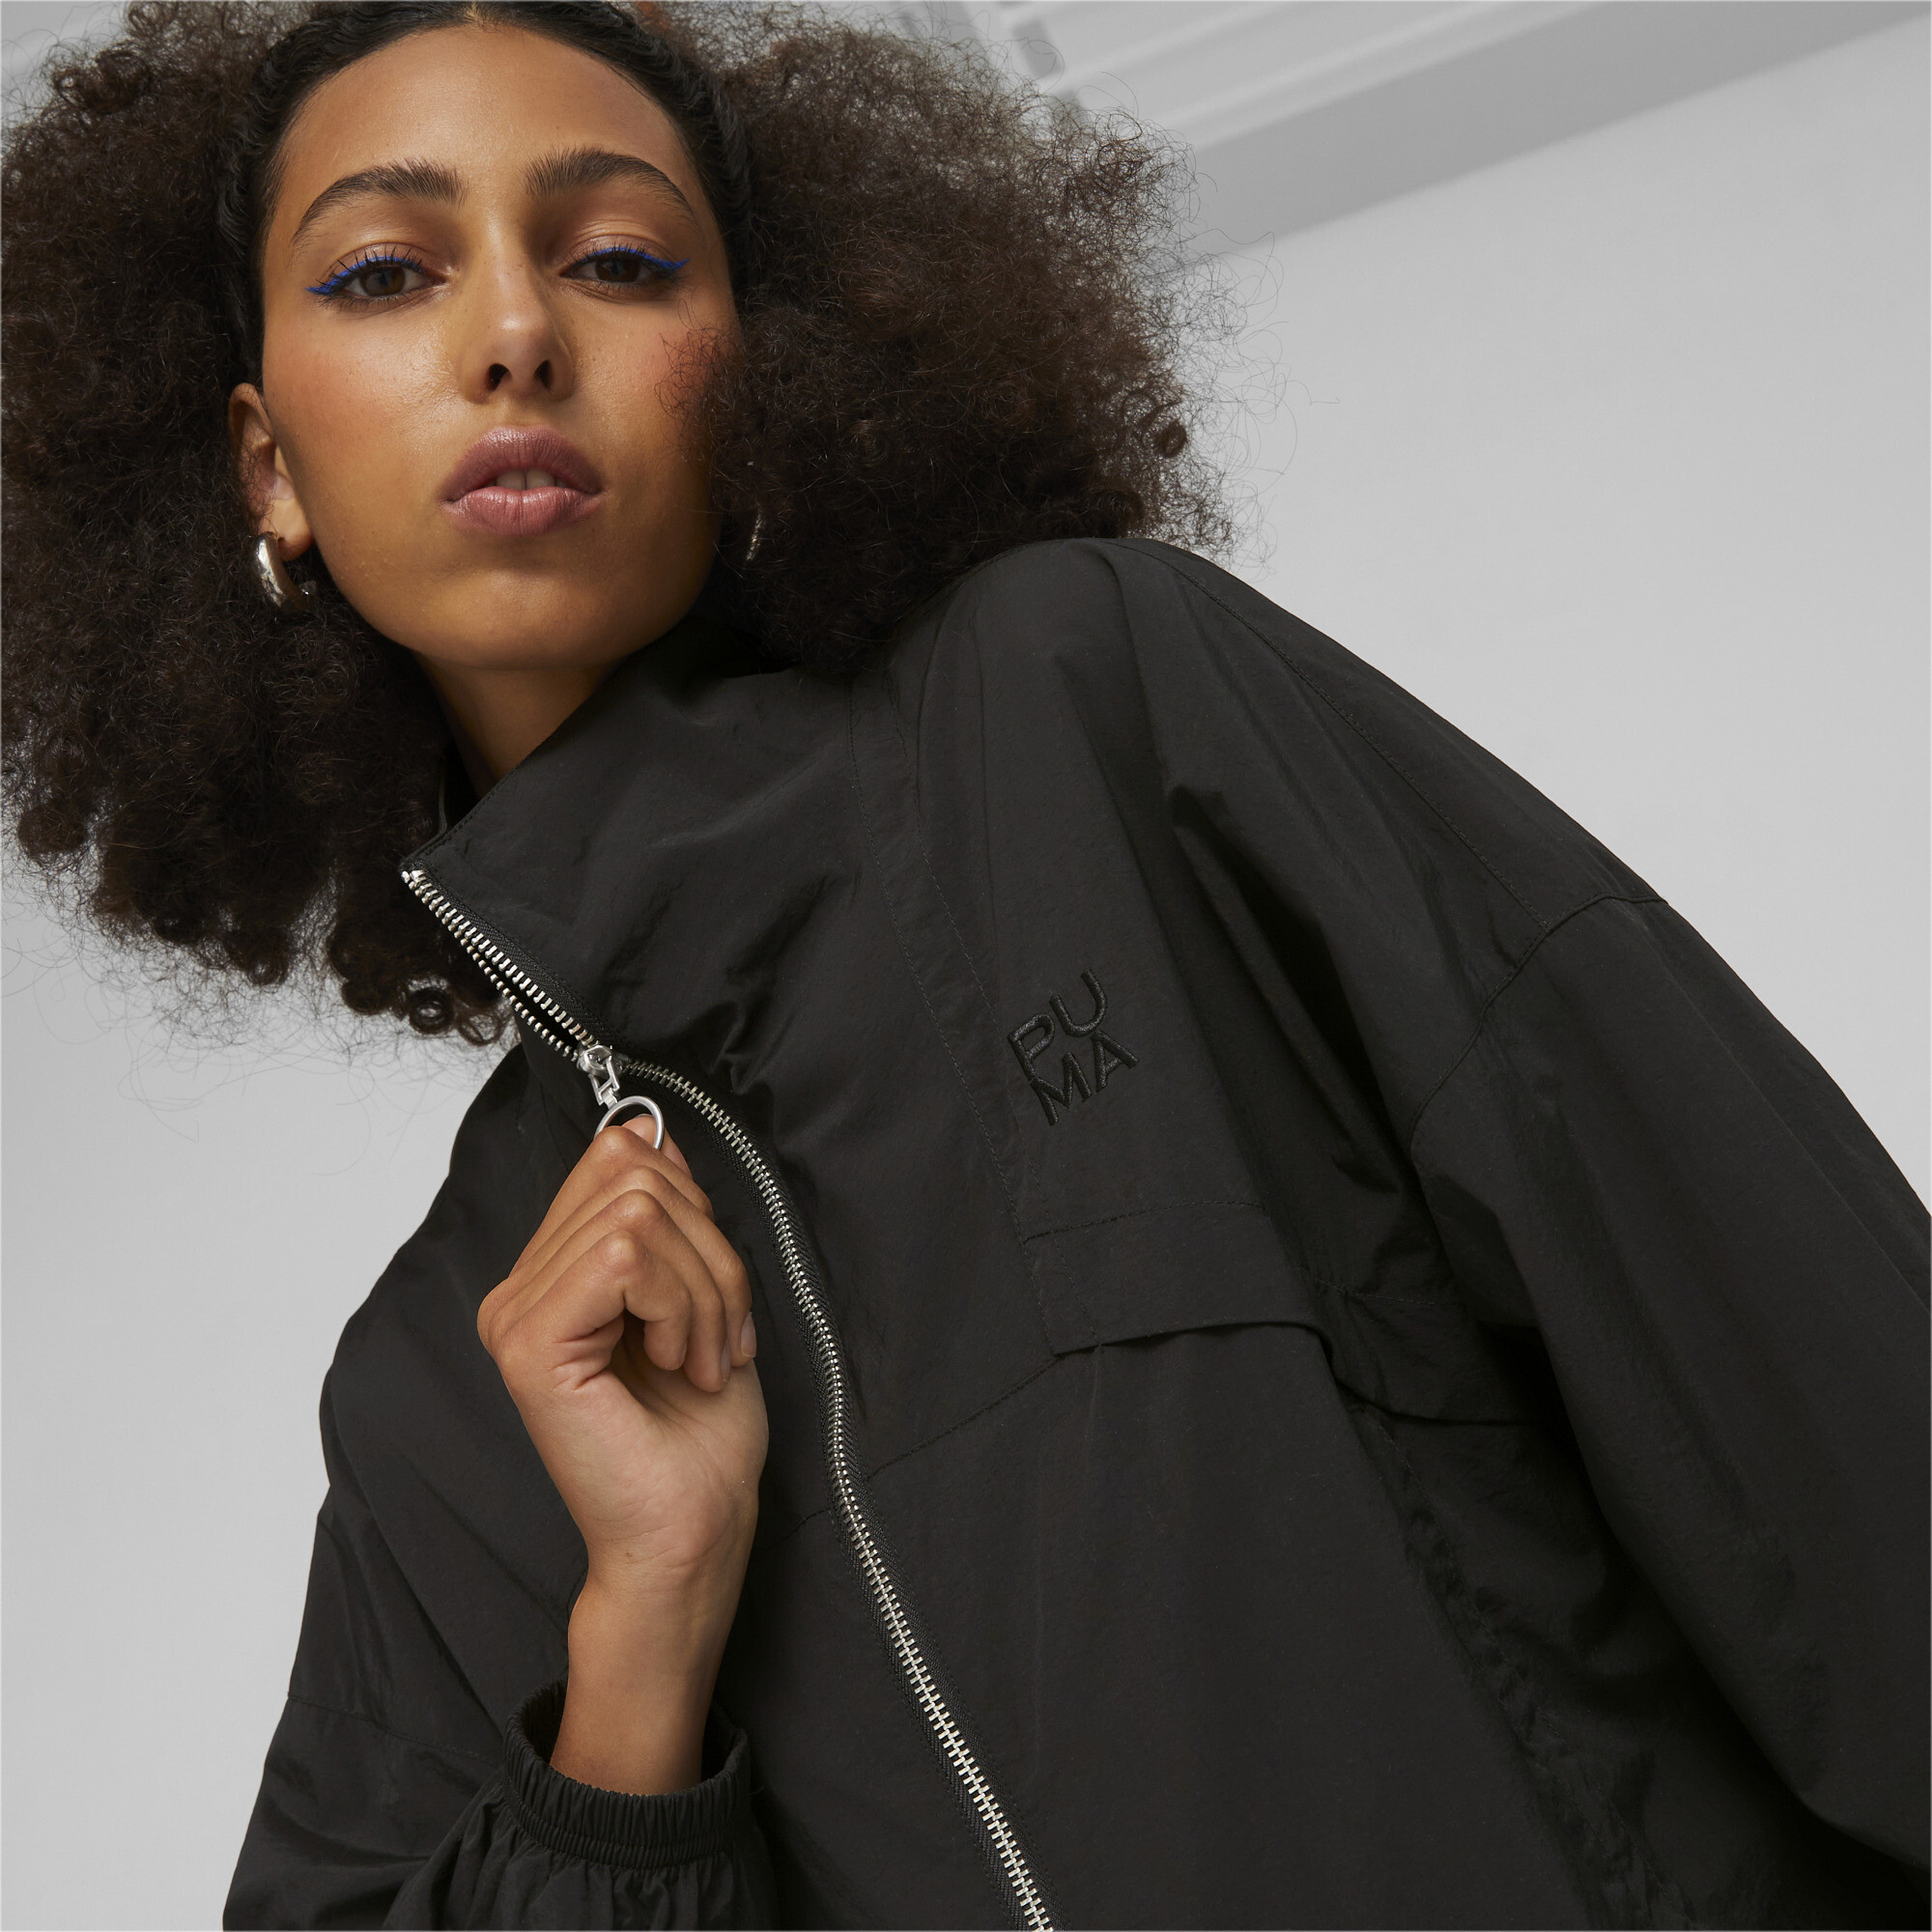 Women's PUMA Infuse Jacket In Black, Size XL